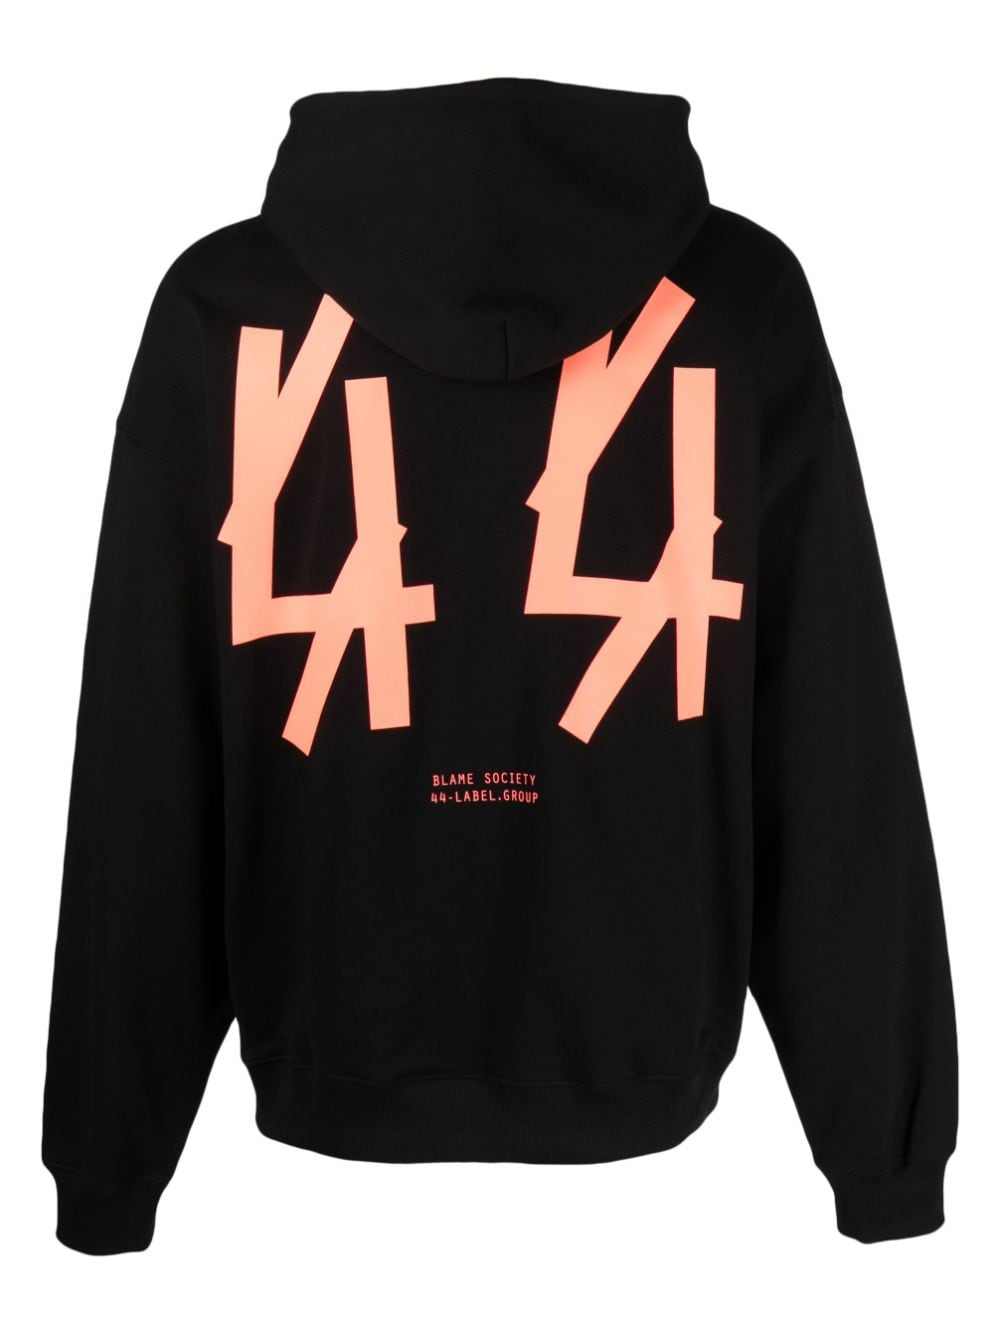 Black hoodie with peach logo